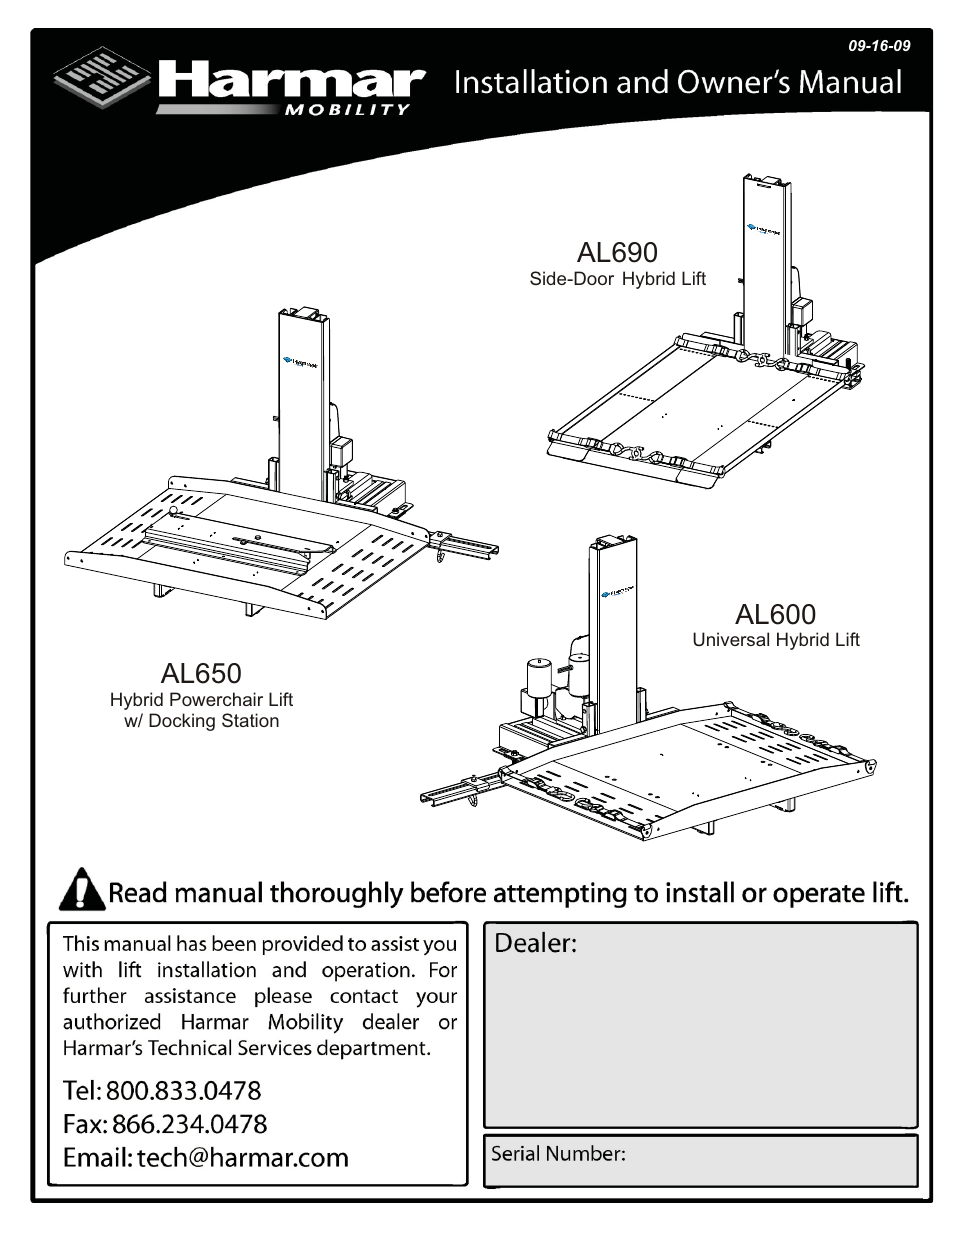 Harmar Mobility AL600 User Manual | 20 pages | Also for: AL690, AL650